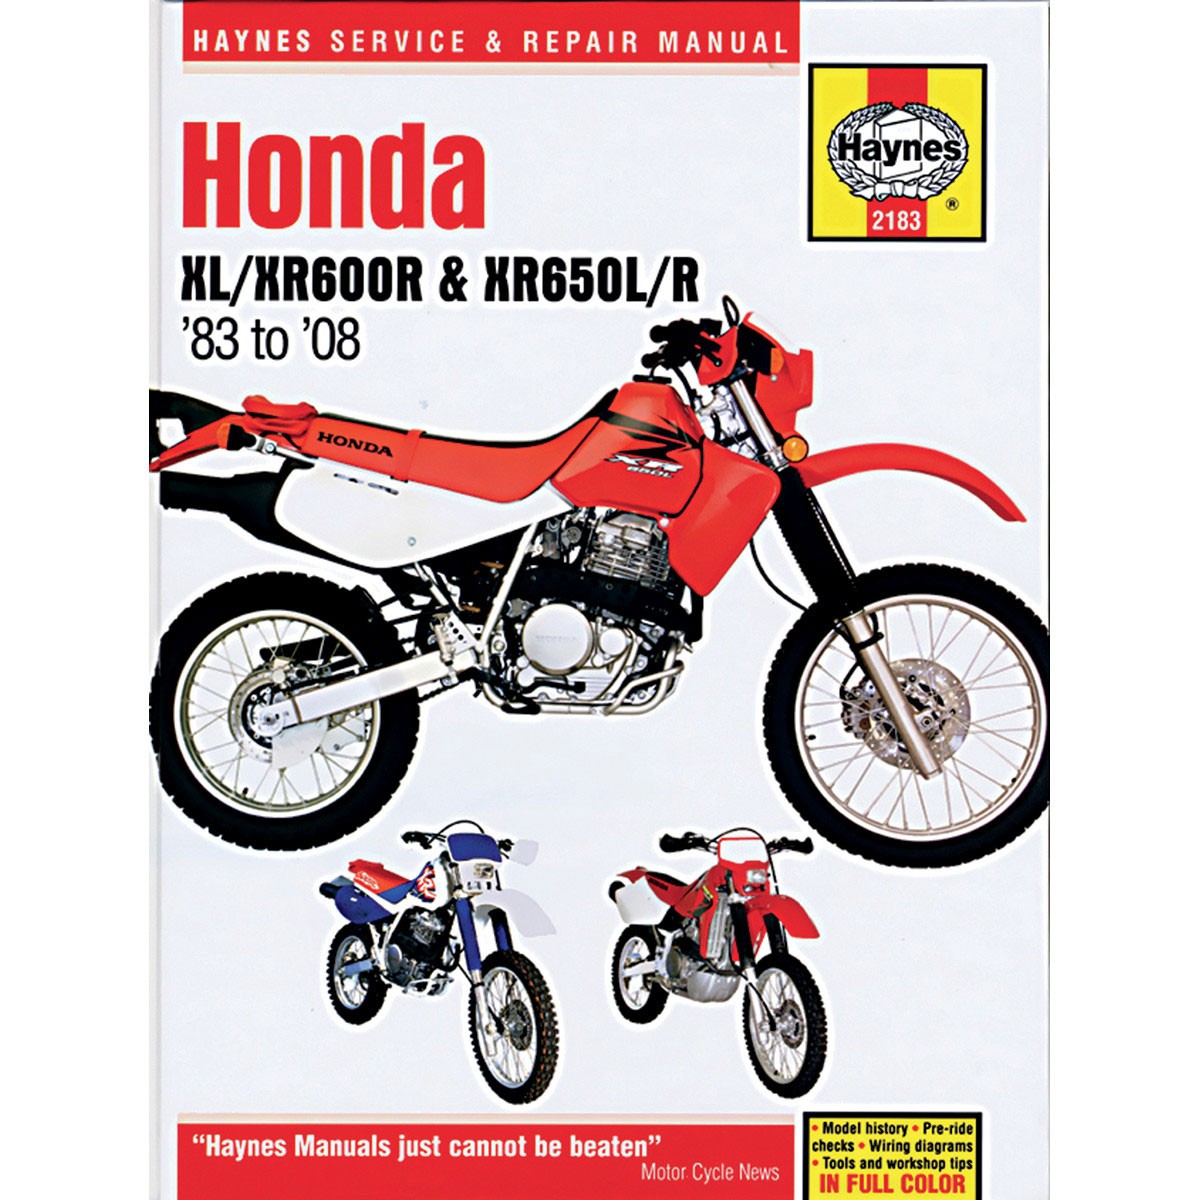 Haynes Repair Manual - Honda XL600R/XR600R/XR650L/R - 2183 ...